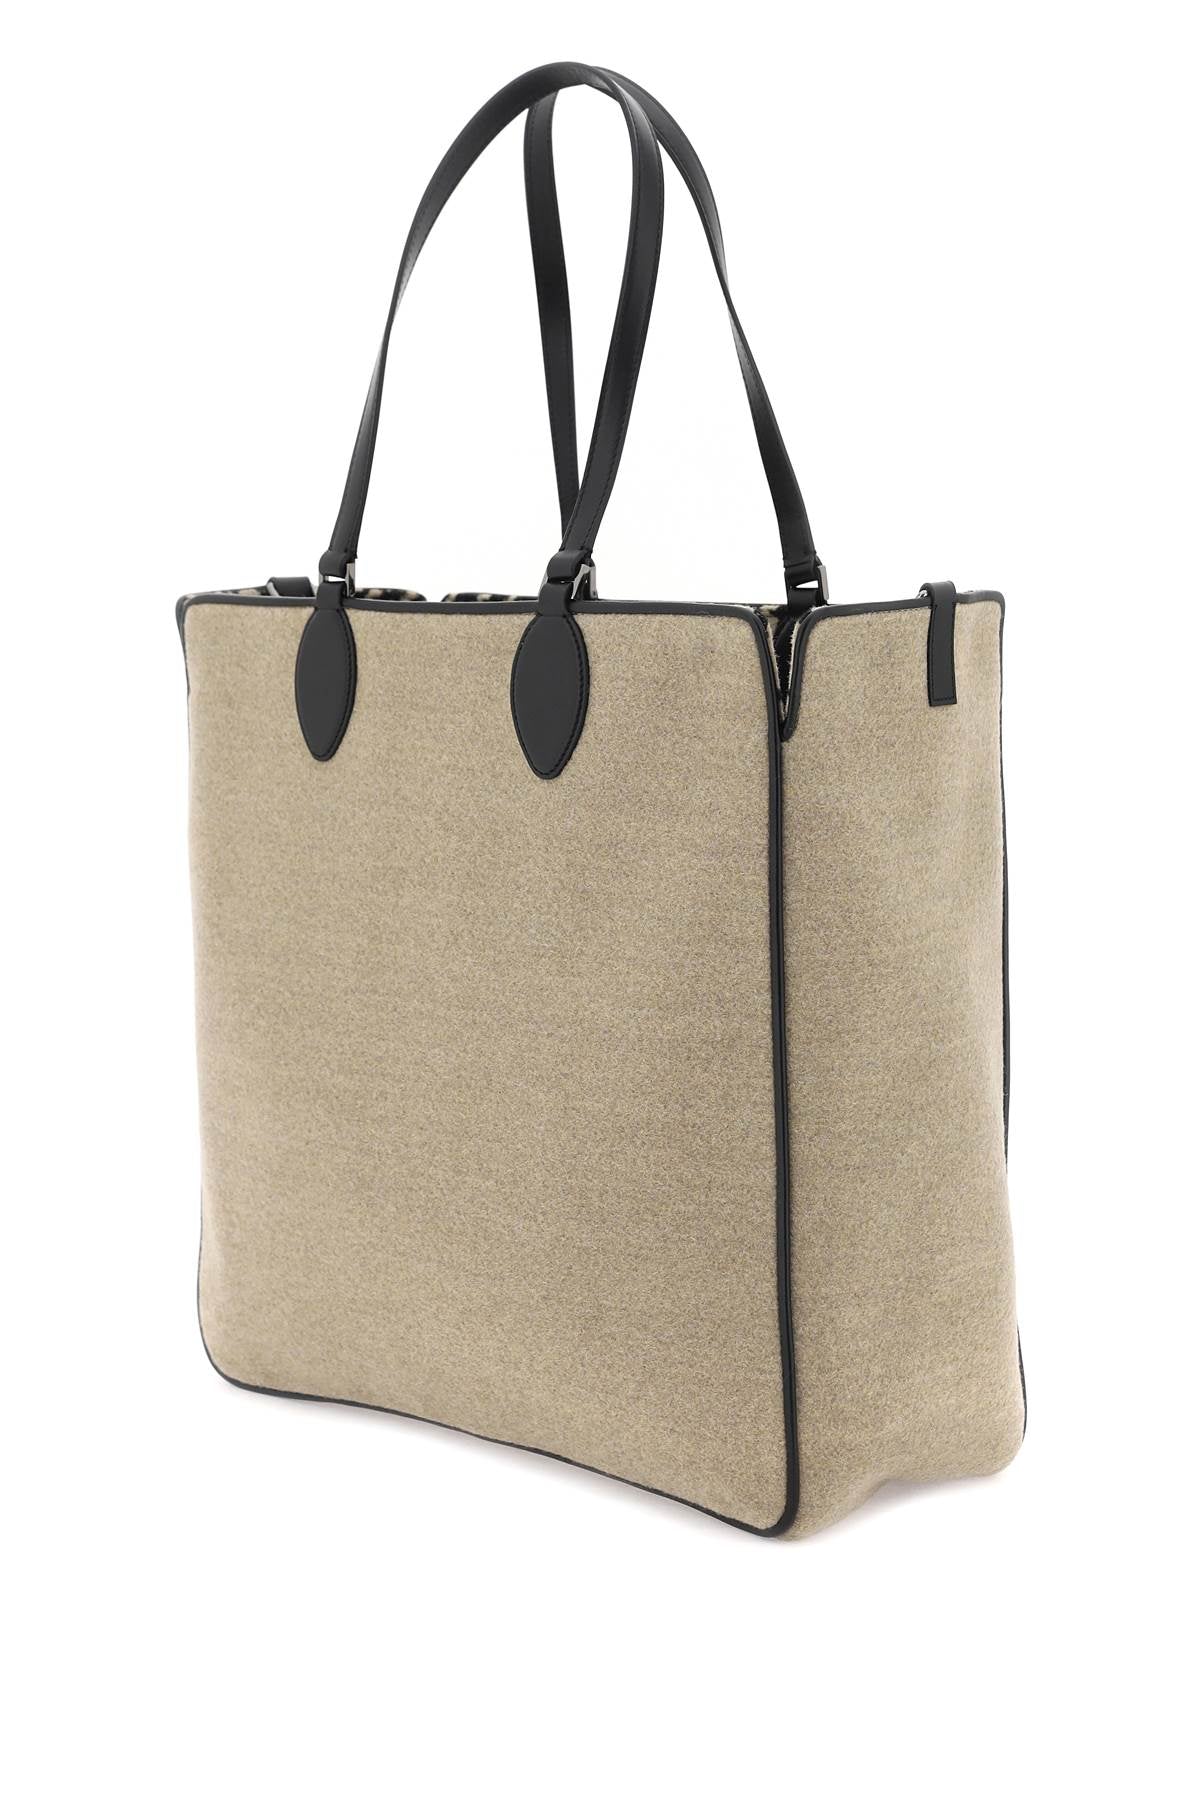 VALENTINO GARAVANI Reversible Wool Tote Handbag with Embroidered Logo and Iconic Toile Motif